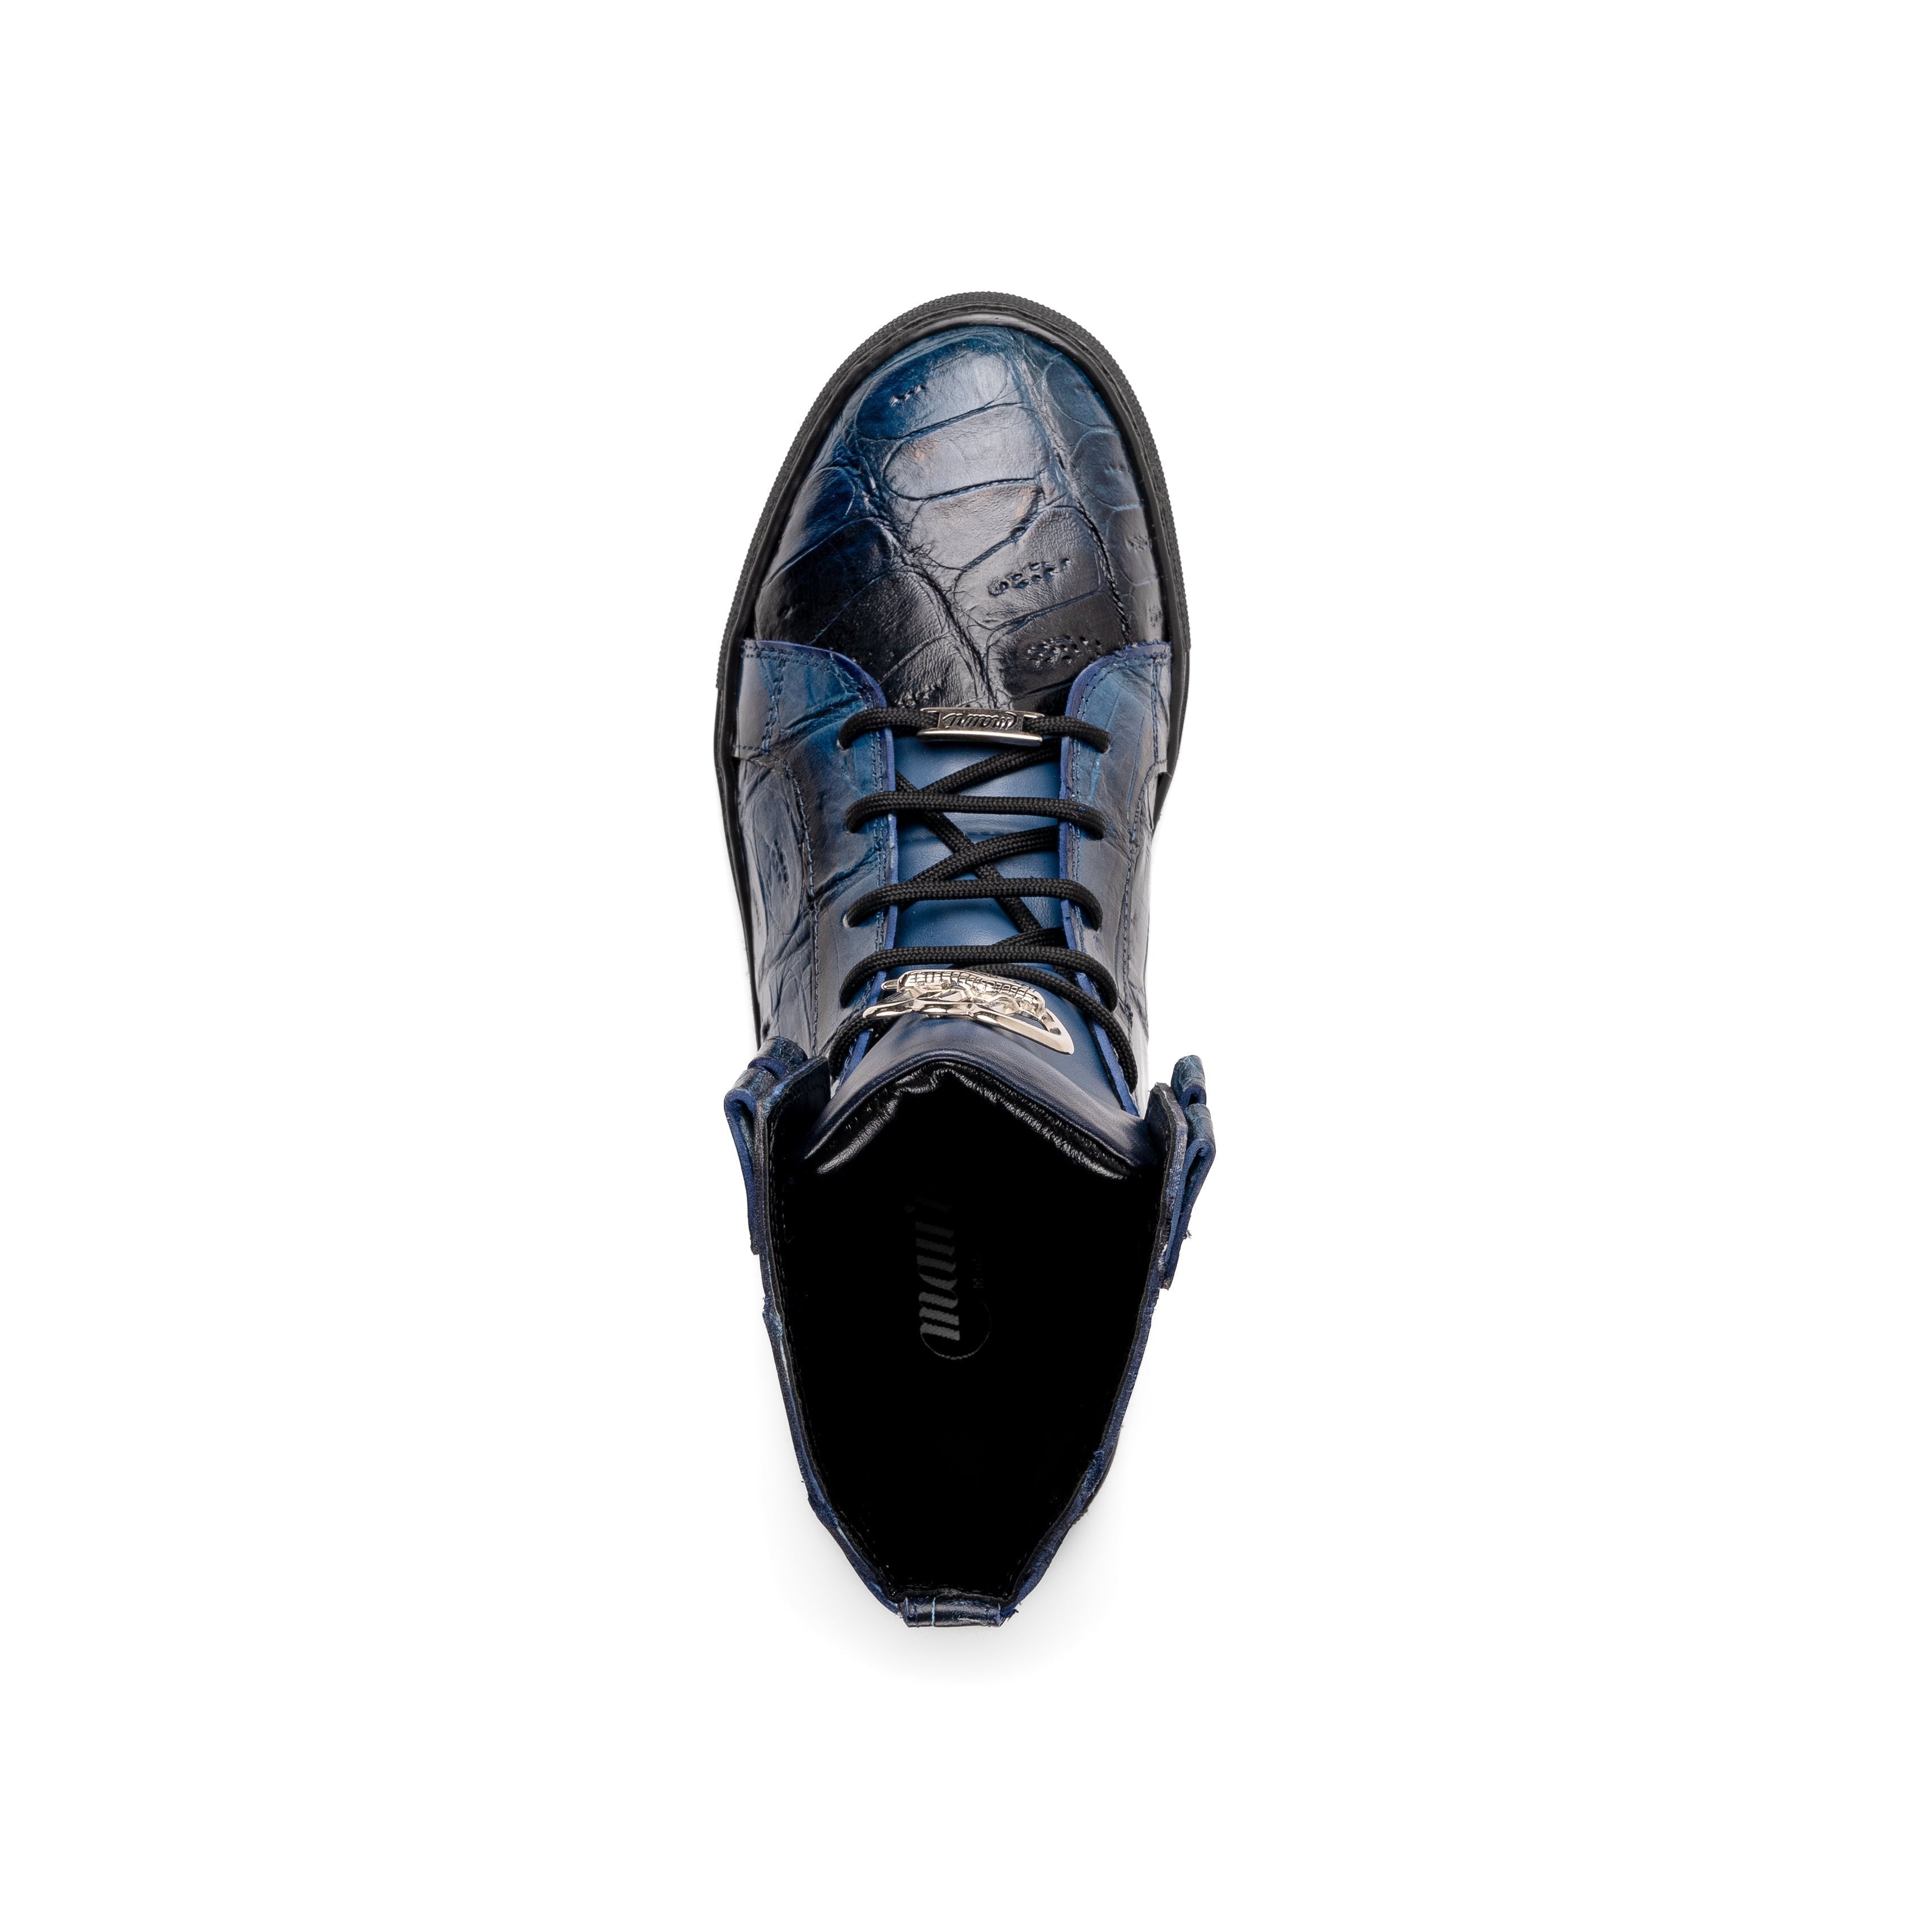 Mauri Golden Boy 6129-1 Men's Shoes Blue with Black Finished